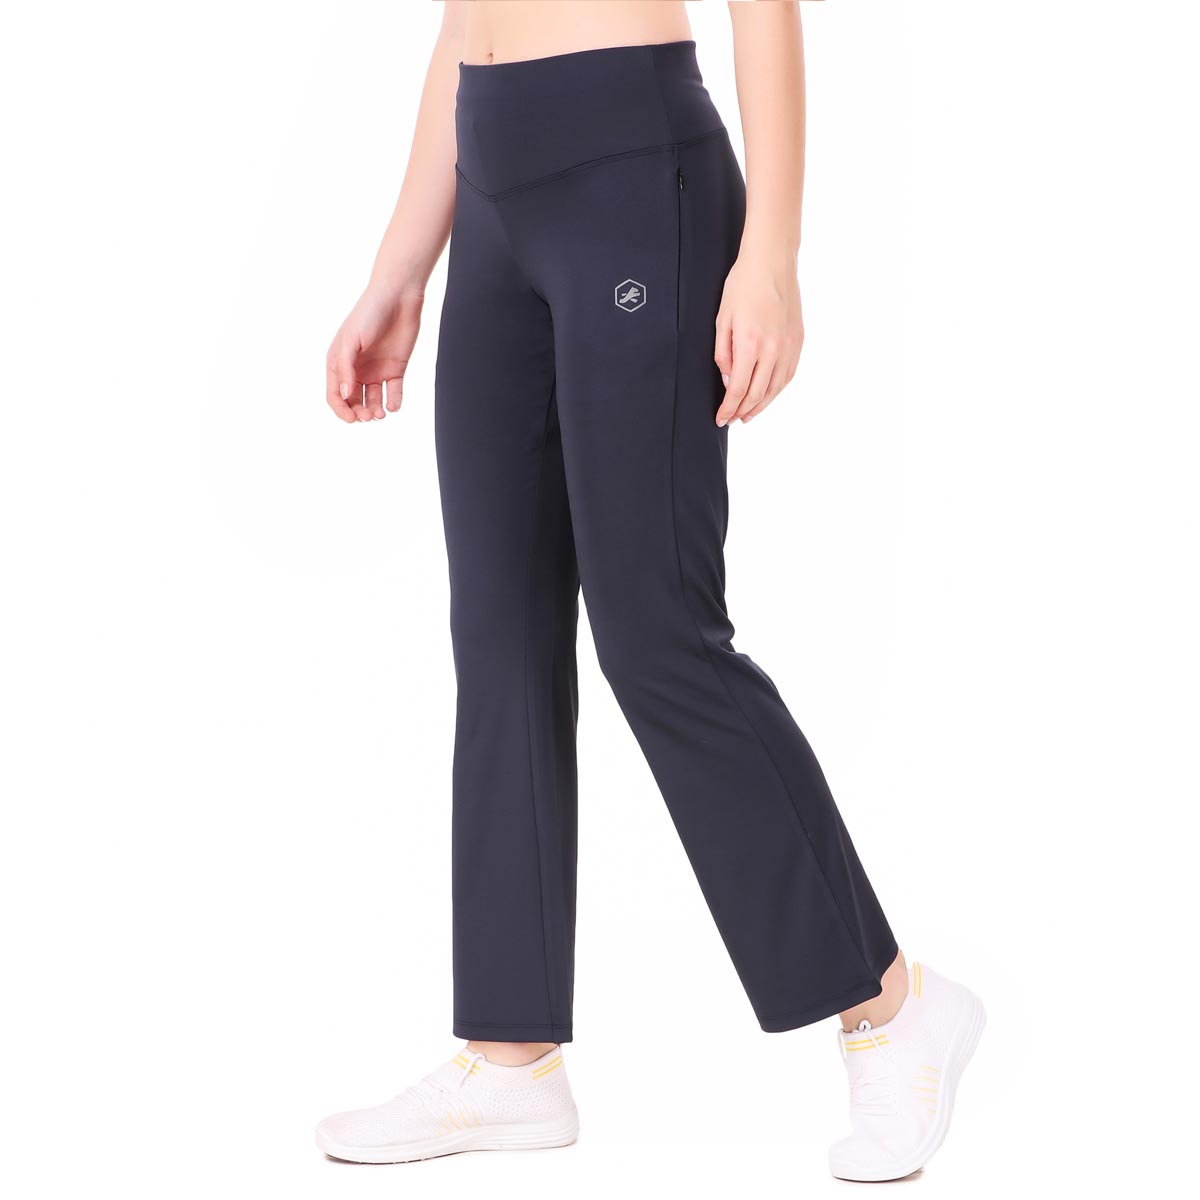 Performance Yoga Pant For Women (Navy Blue)